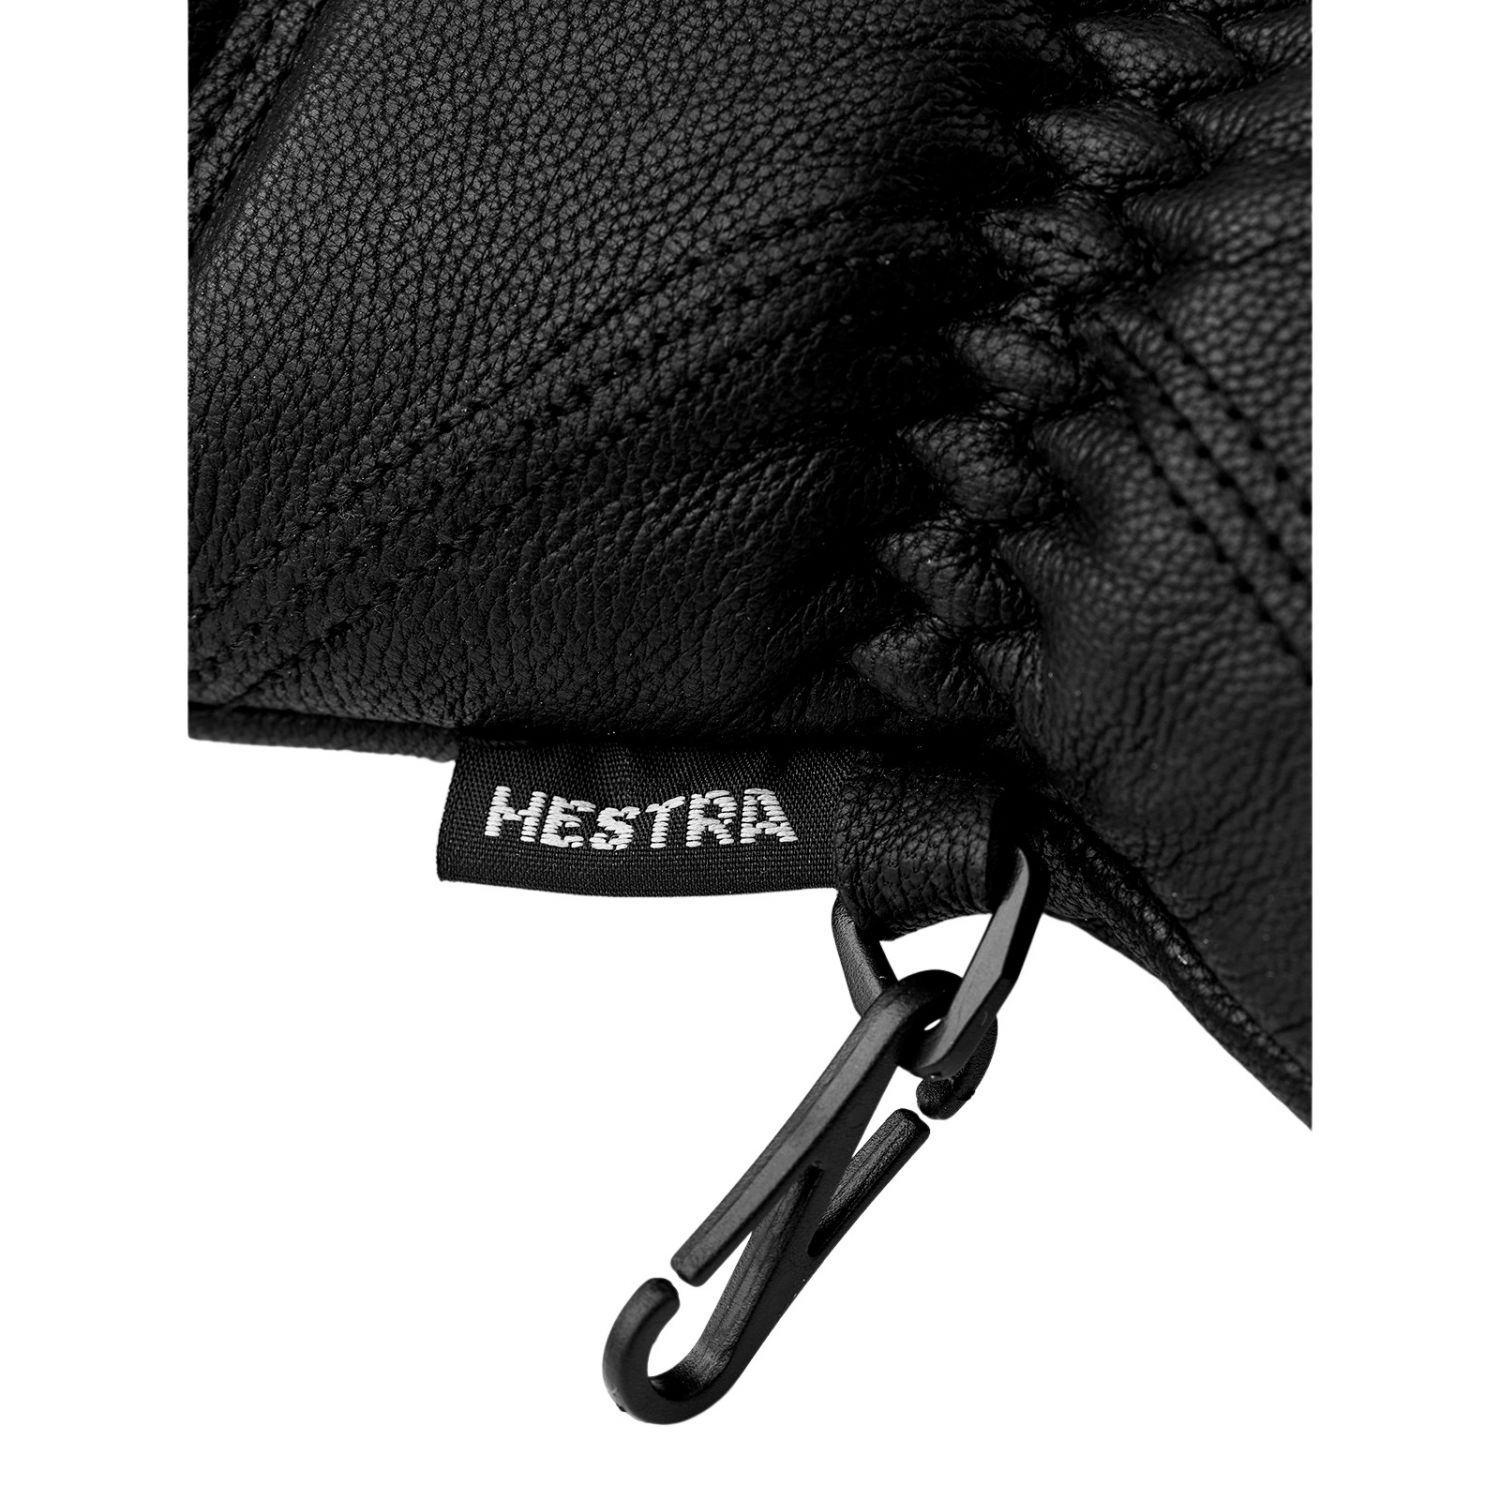 Hestra Leather Box, vante, svart